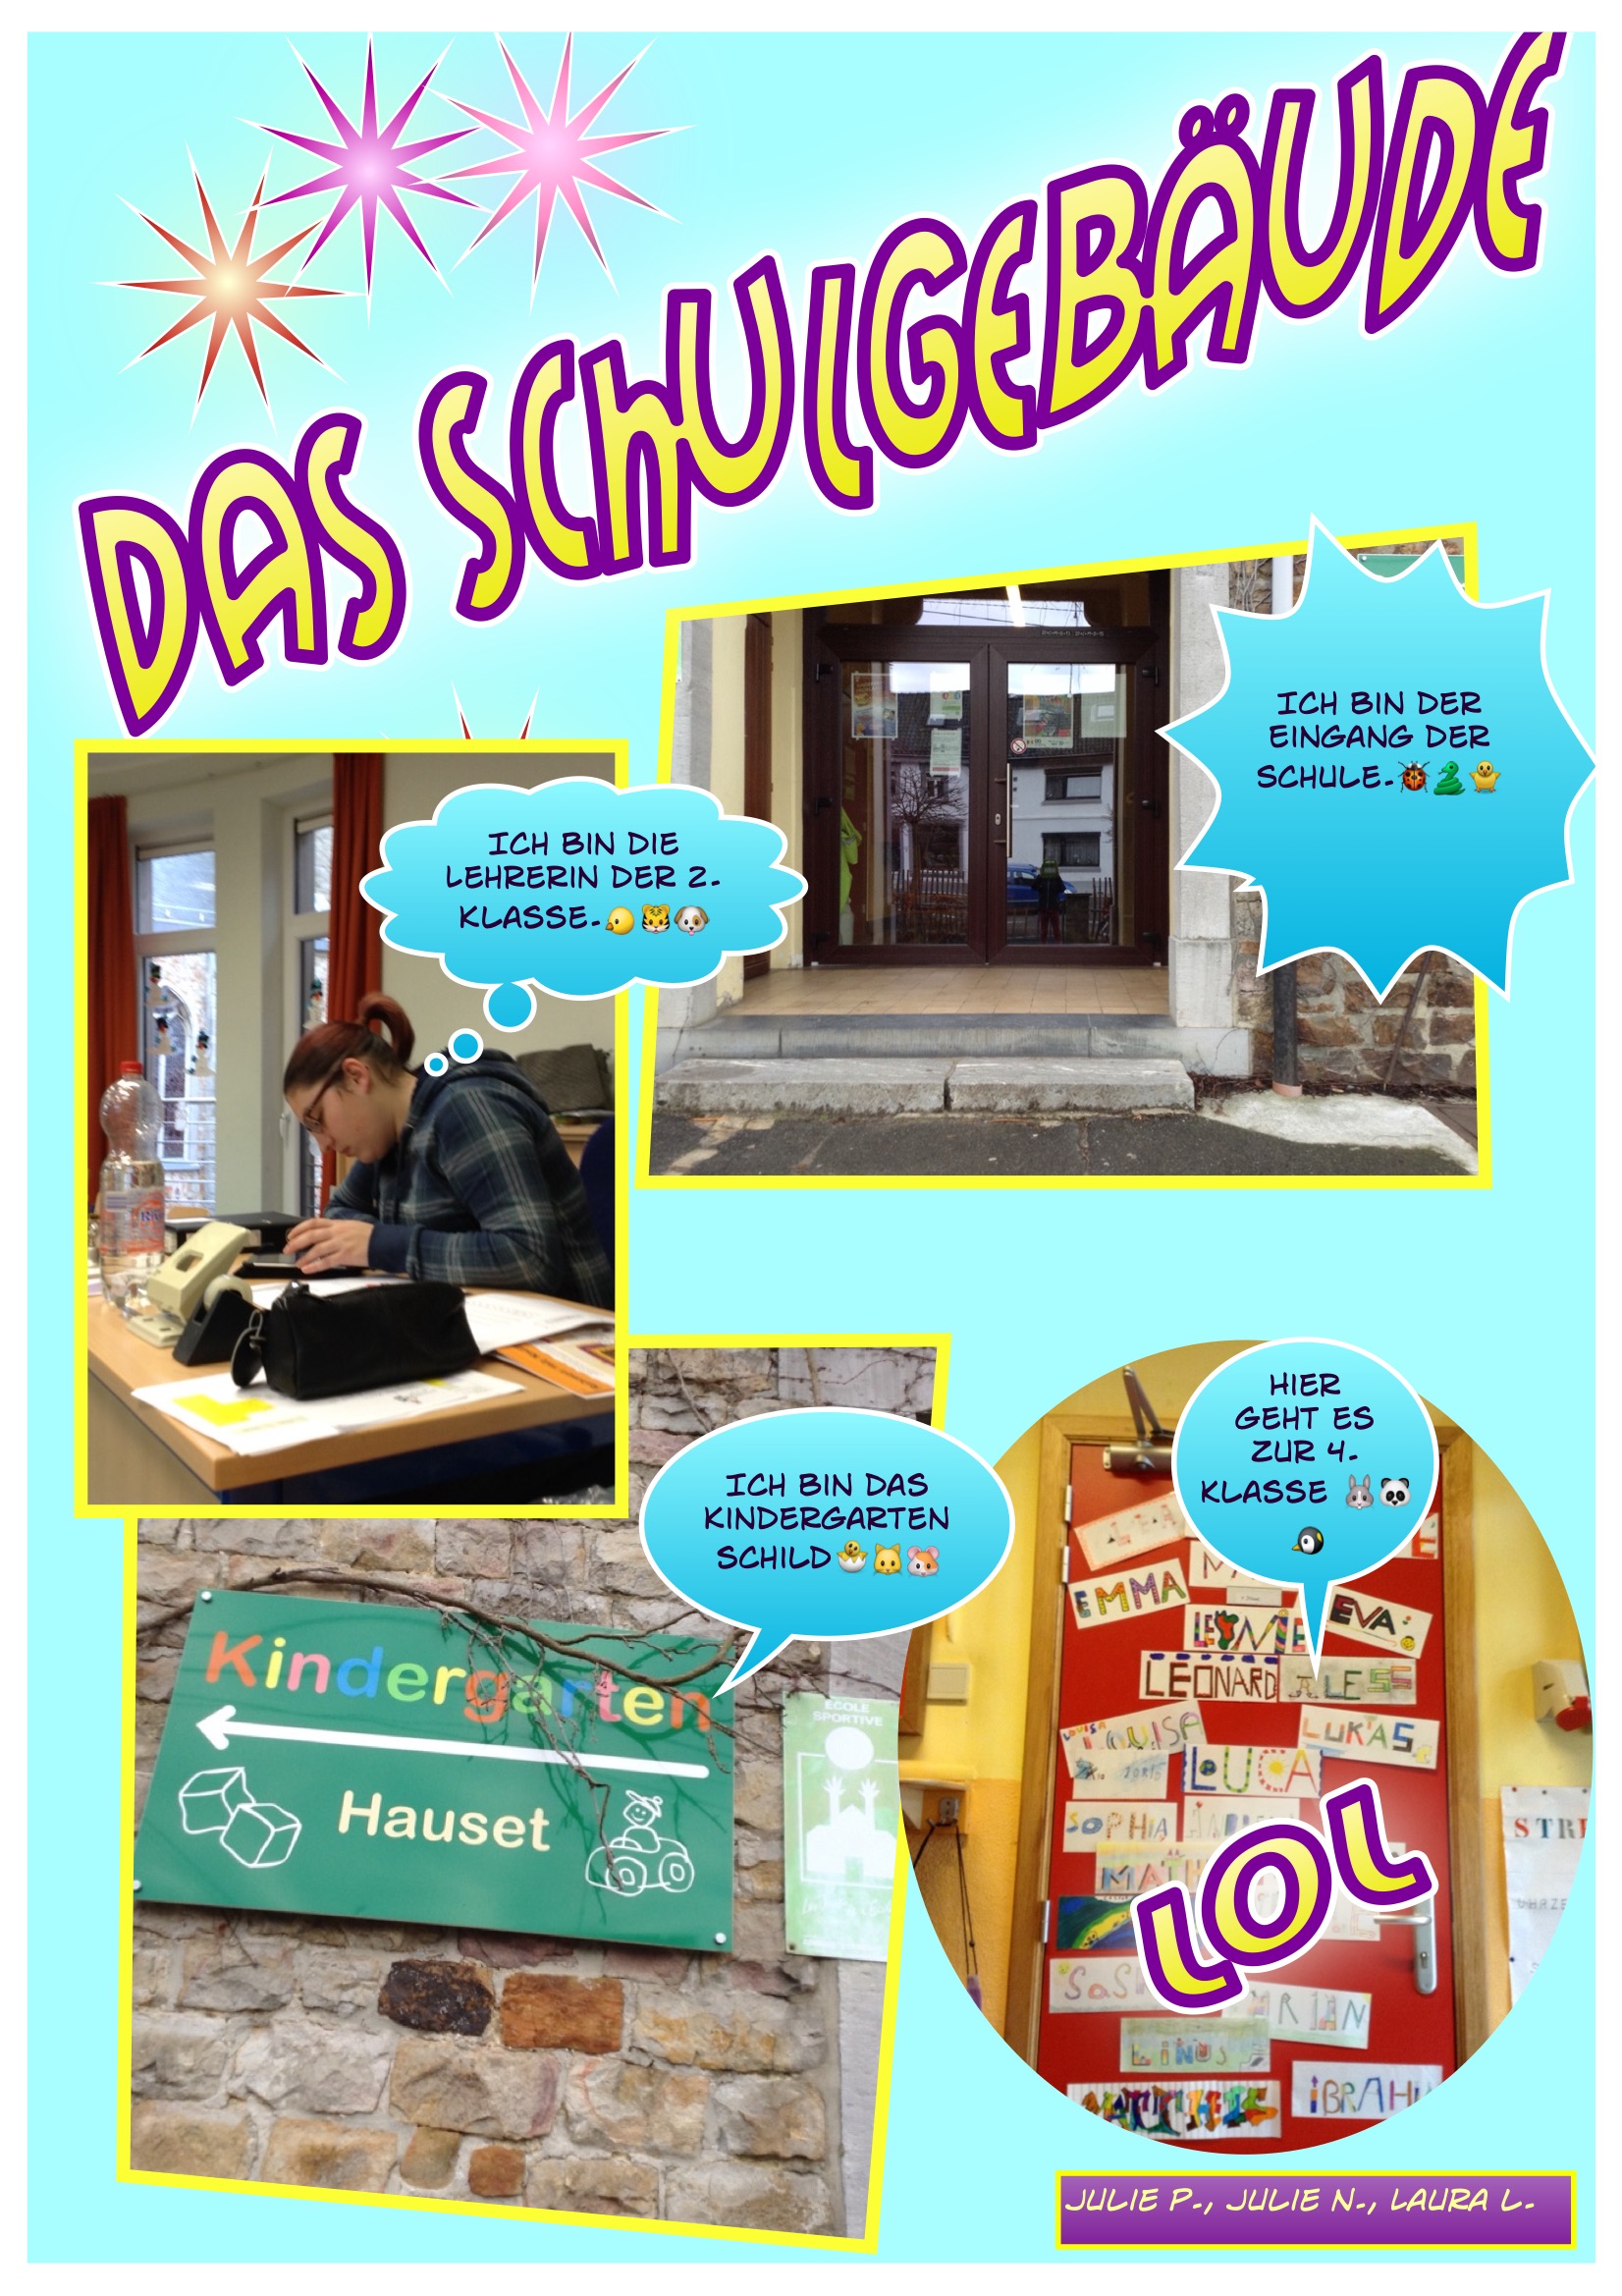 Unsere_schule_comic